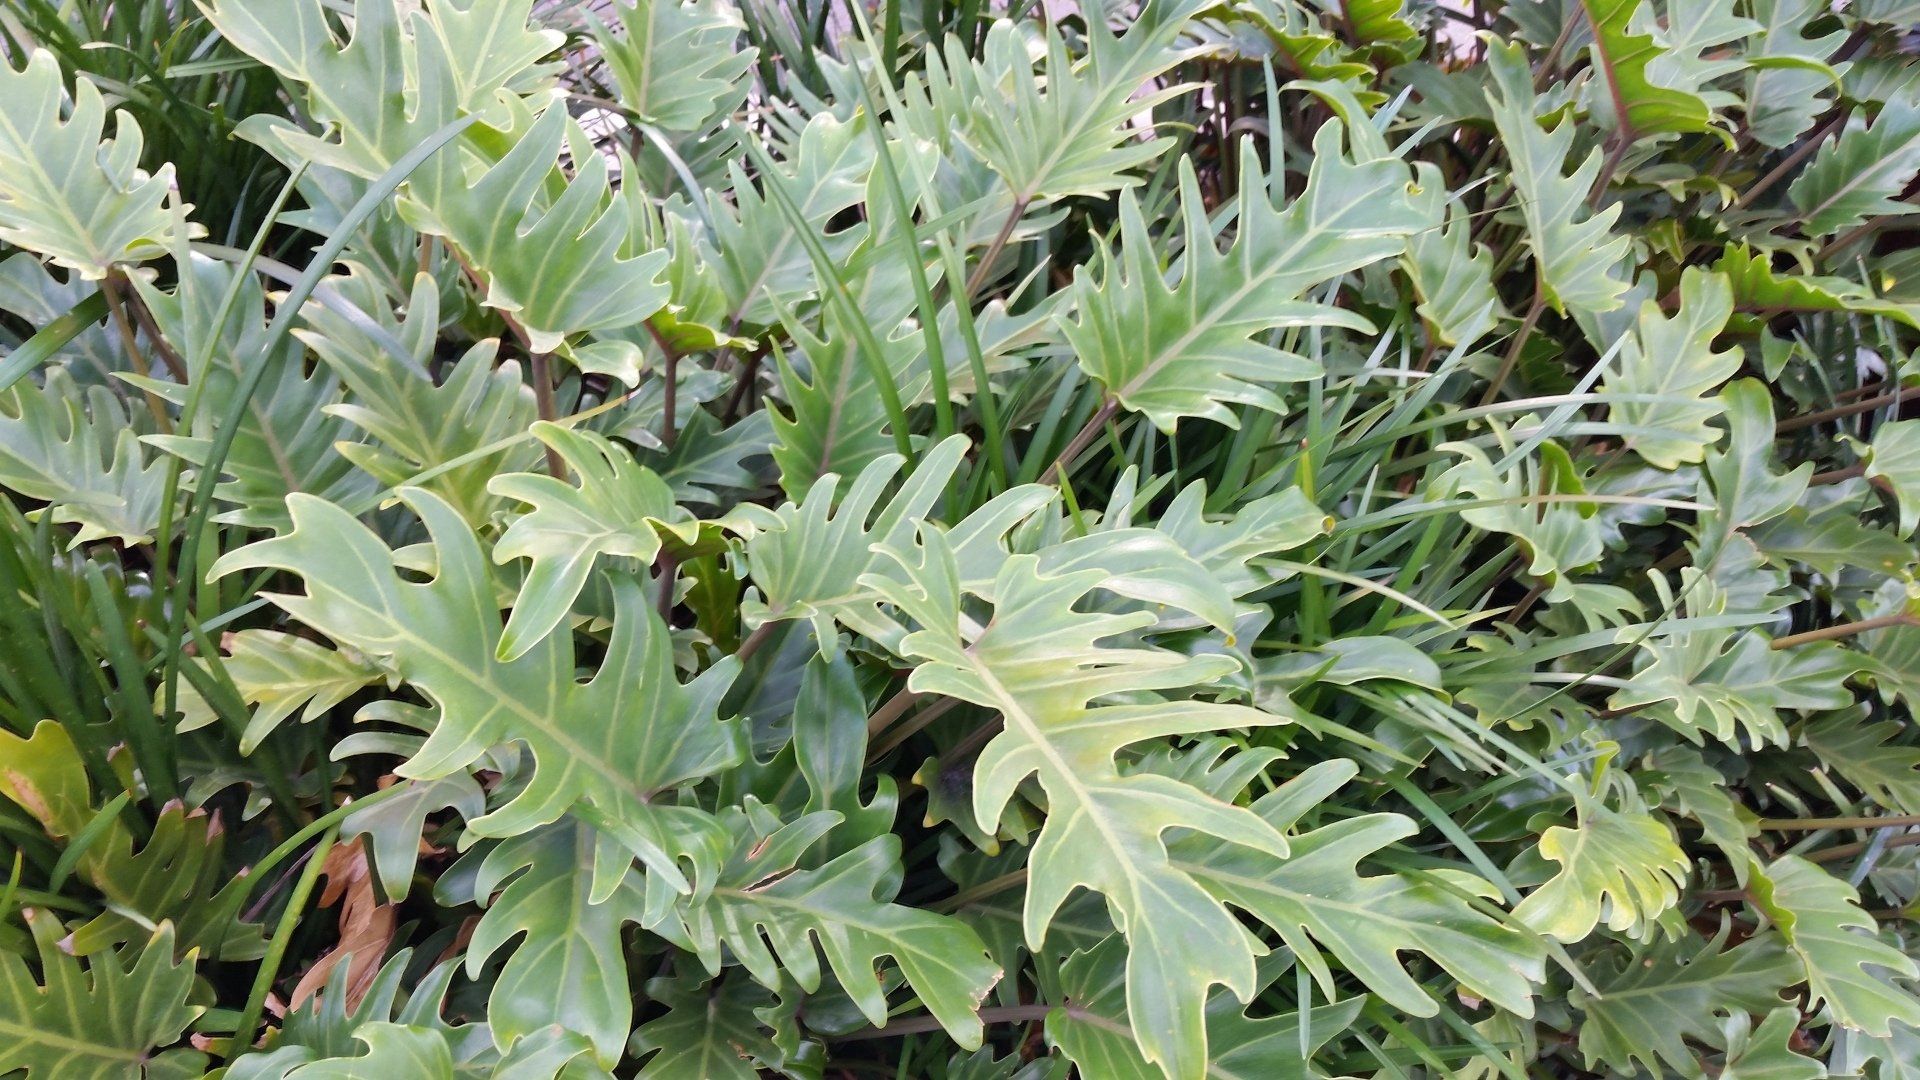 Philodendron Xanadu growing in a garden